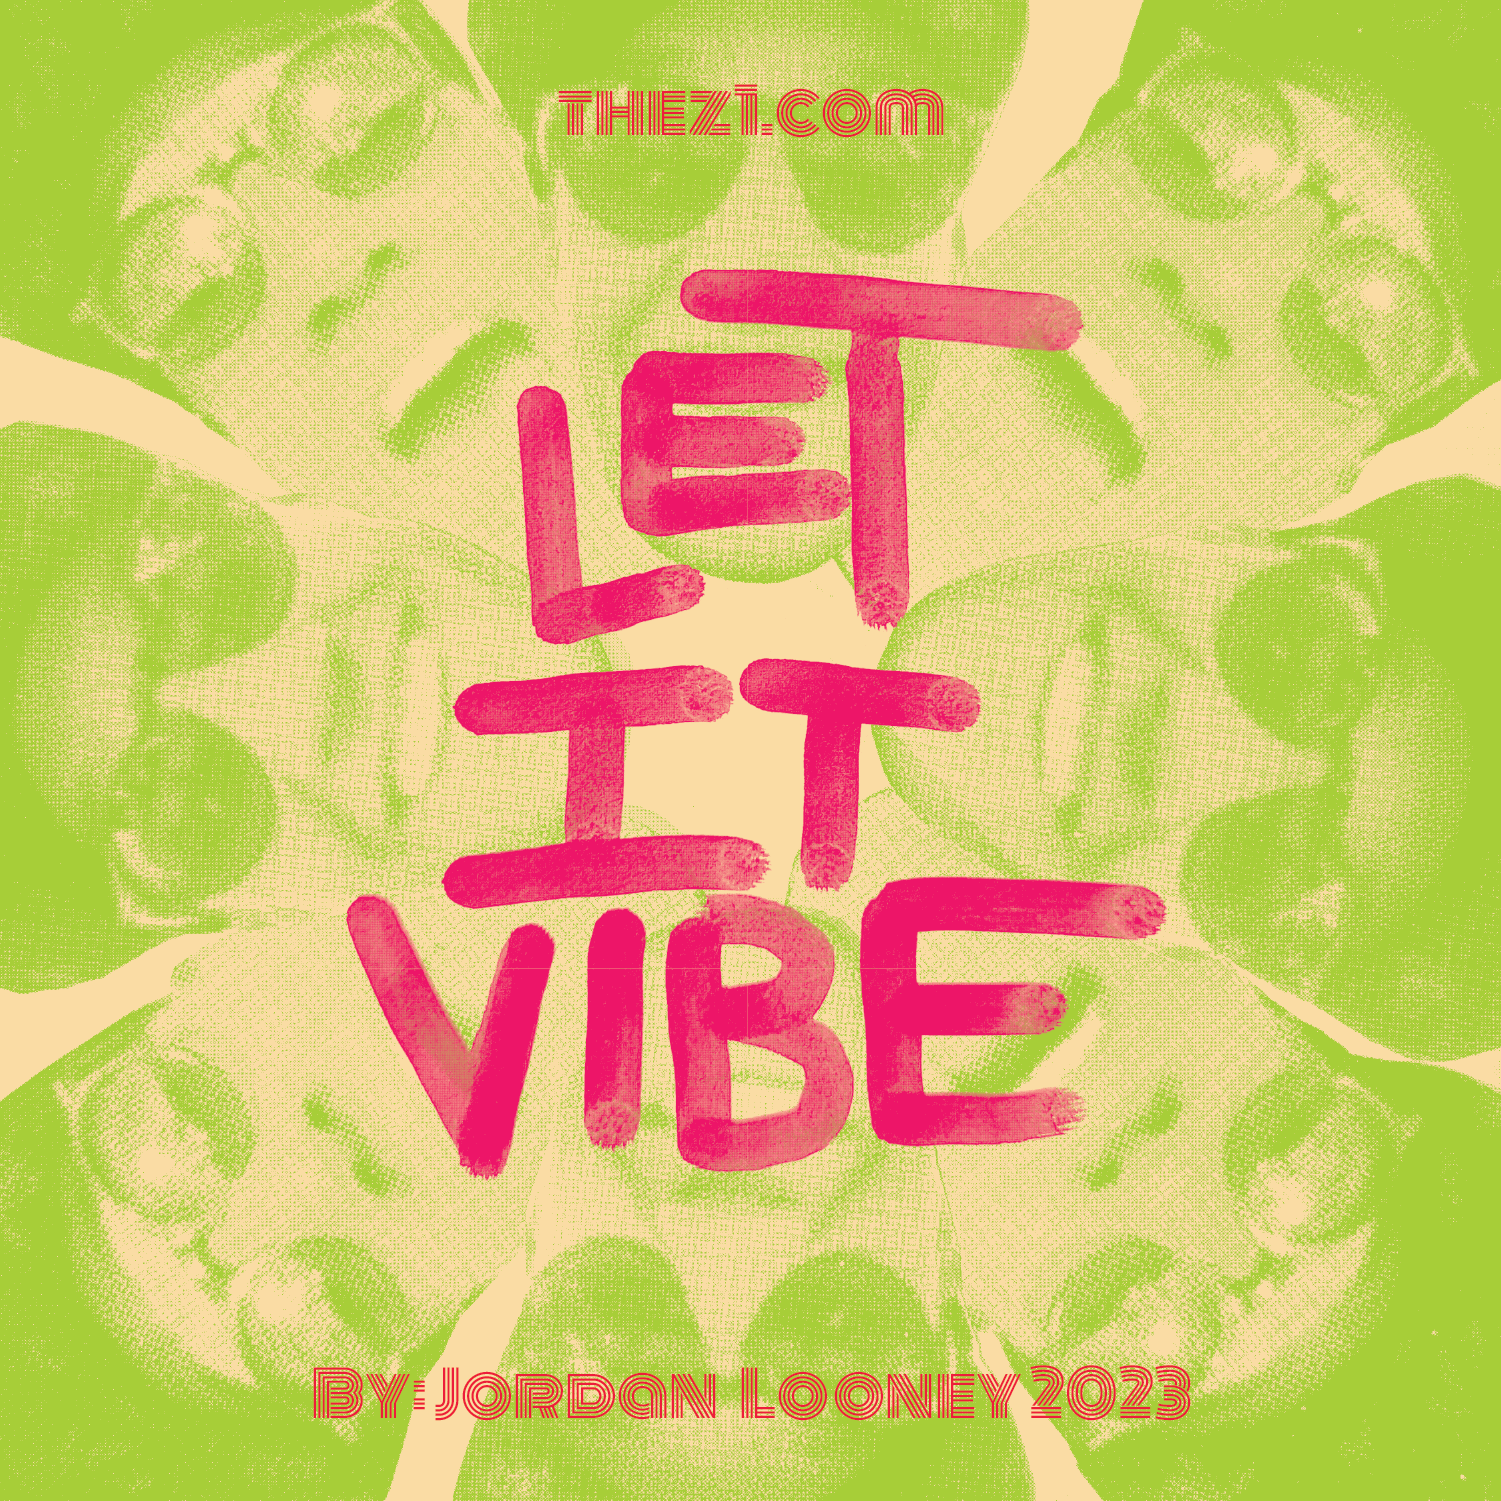 Jordan Looney - "Let It Vibe" 2023